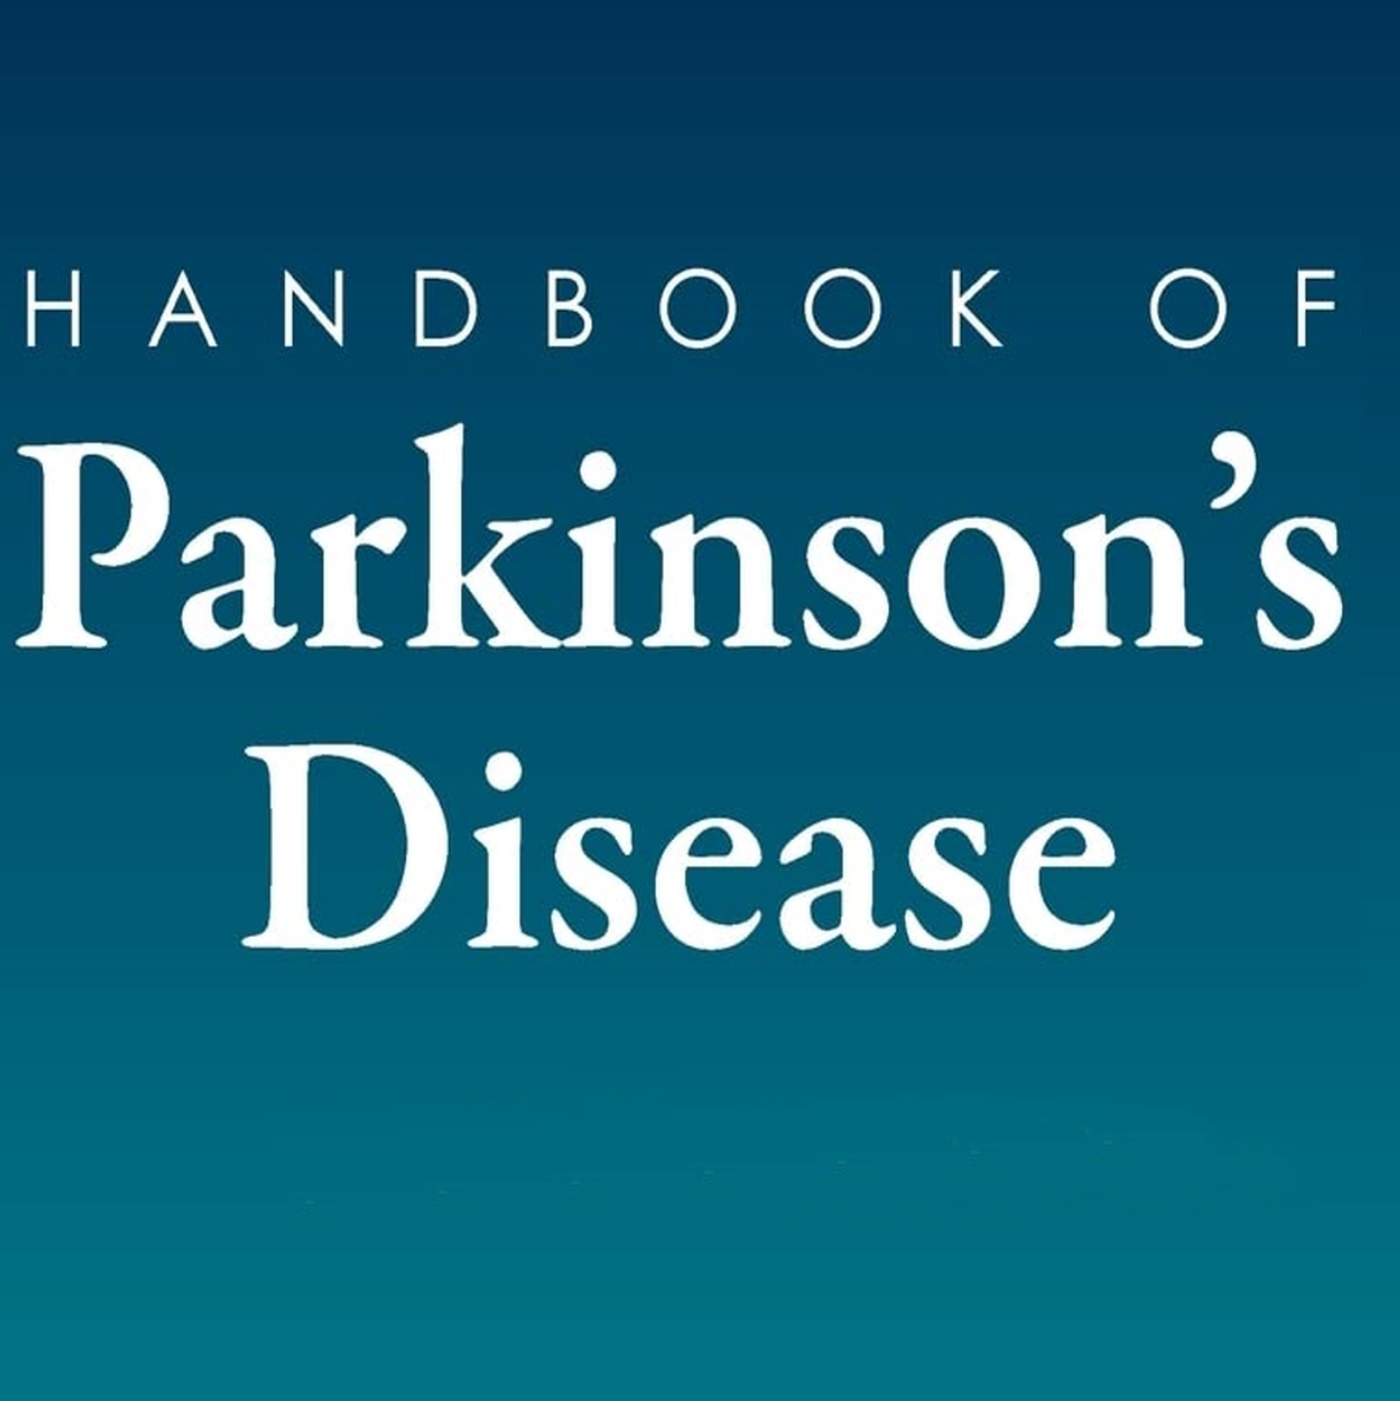 Handbook of Parkinson’s disease information and news